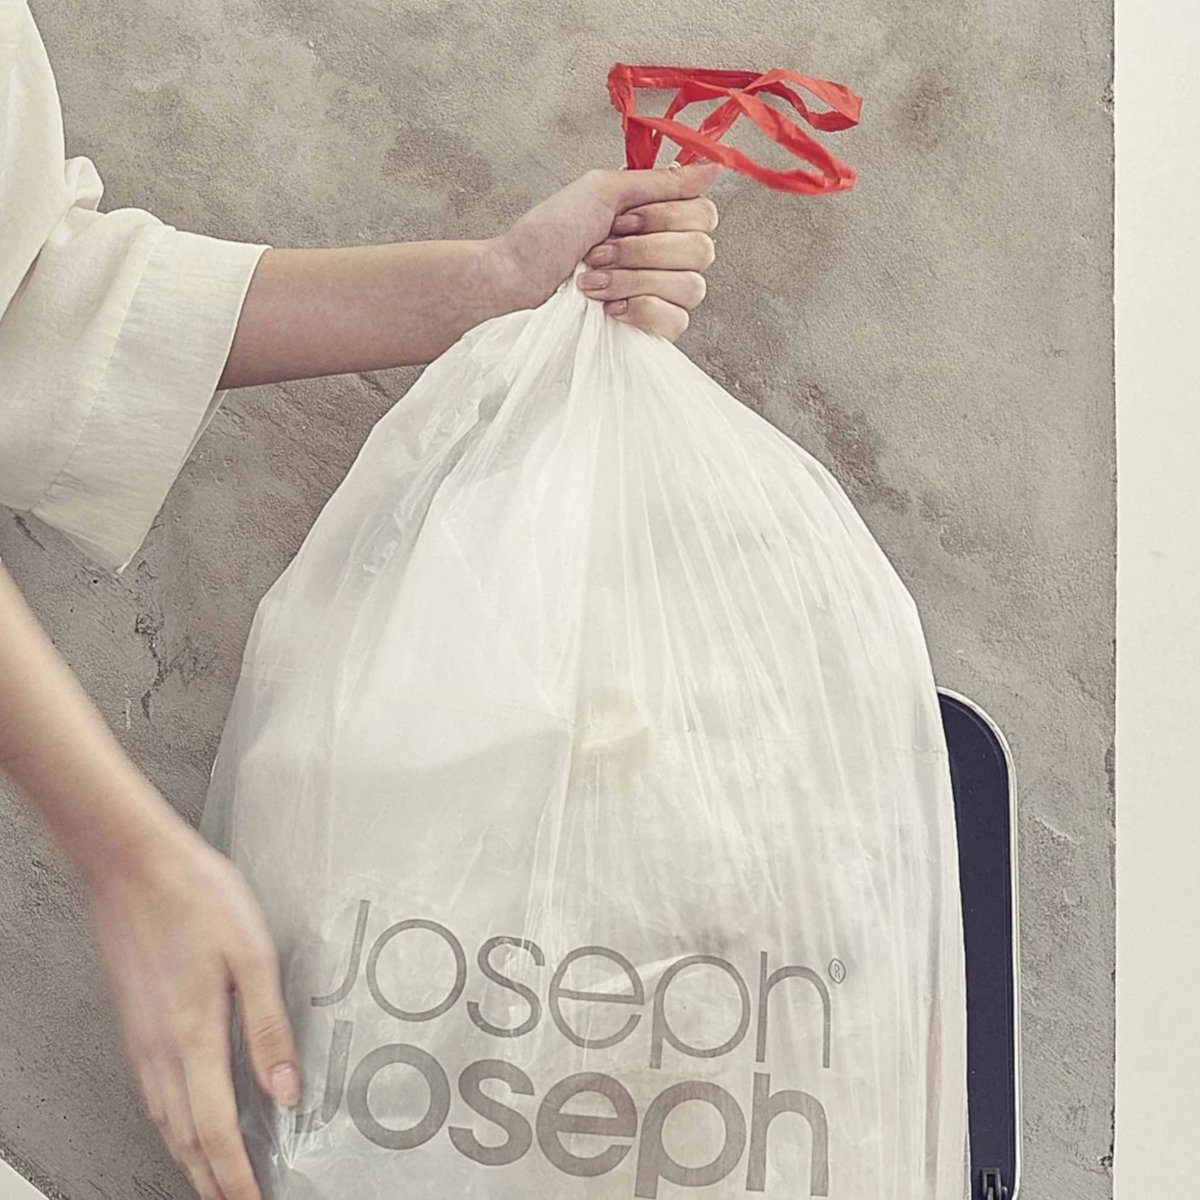 Joseph Joseph Porta 20 Müllbeutel und Modell für Titan Passgenau Müllbeutel IW5,